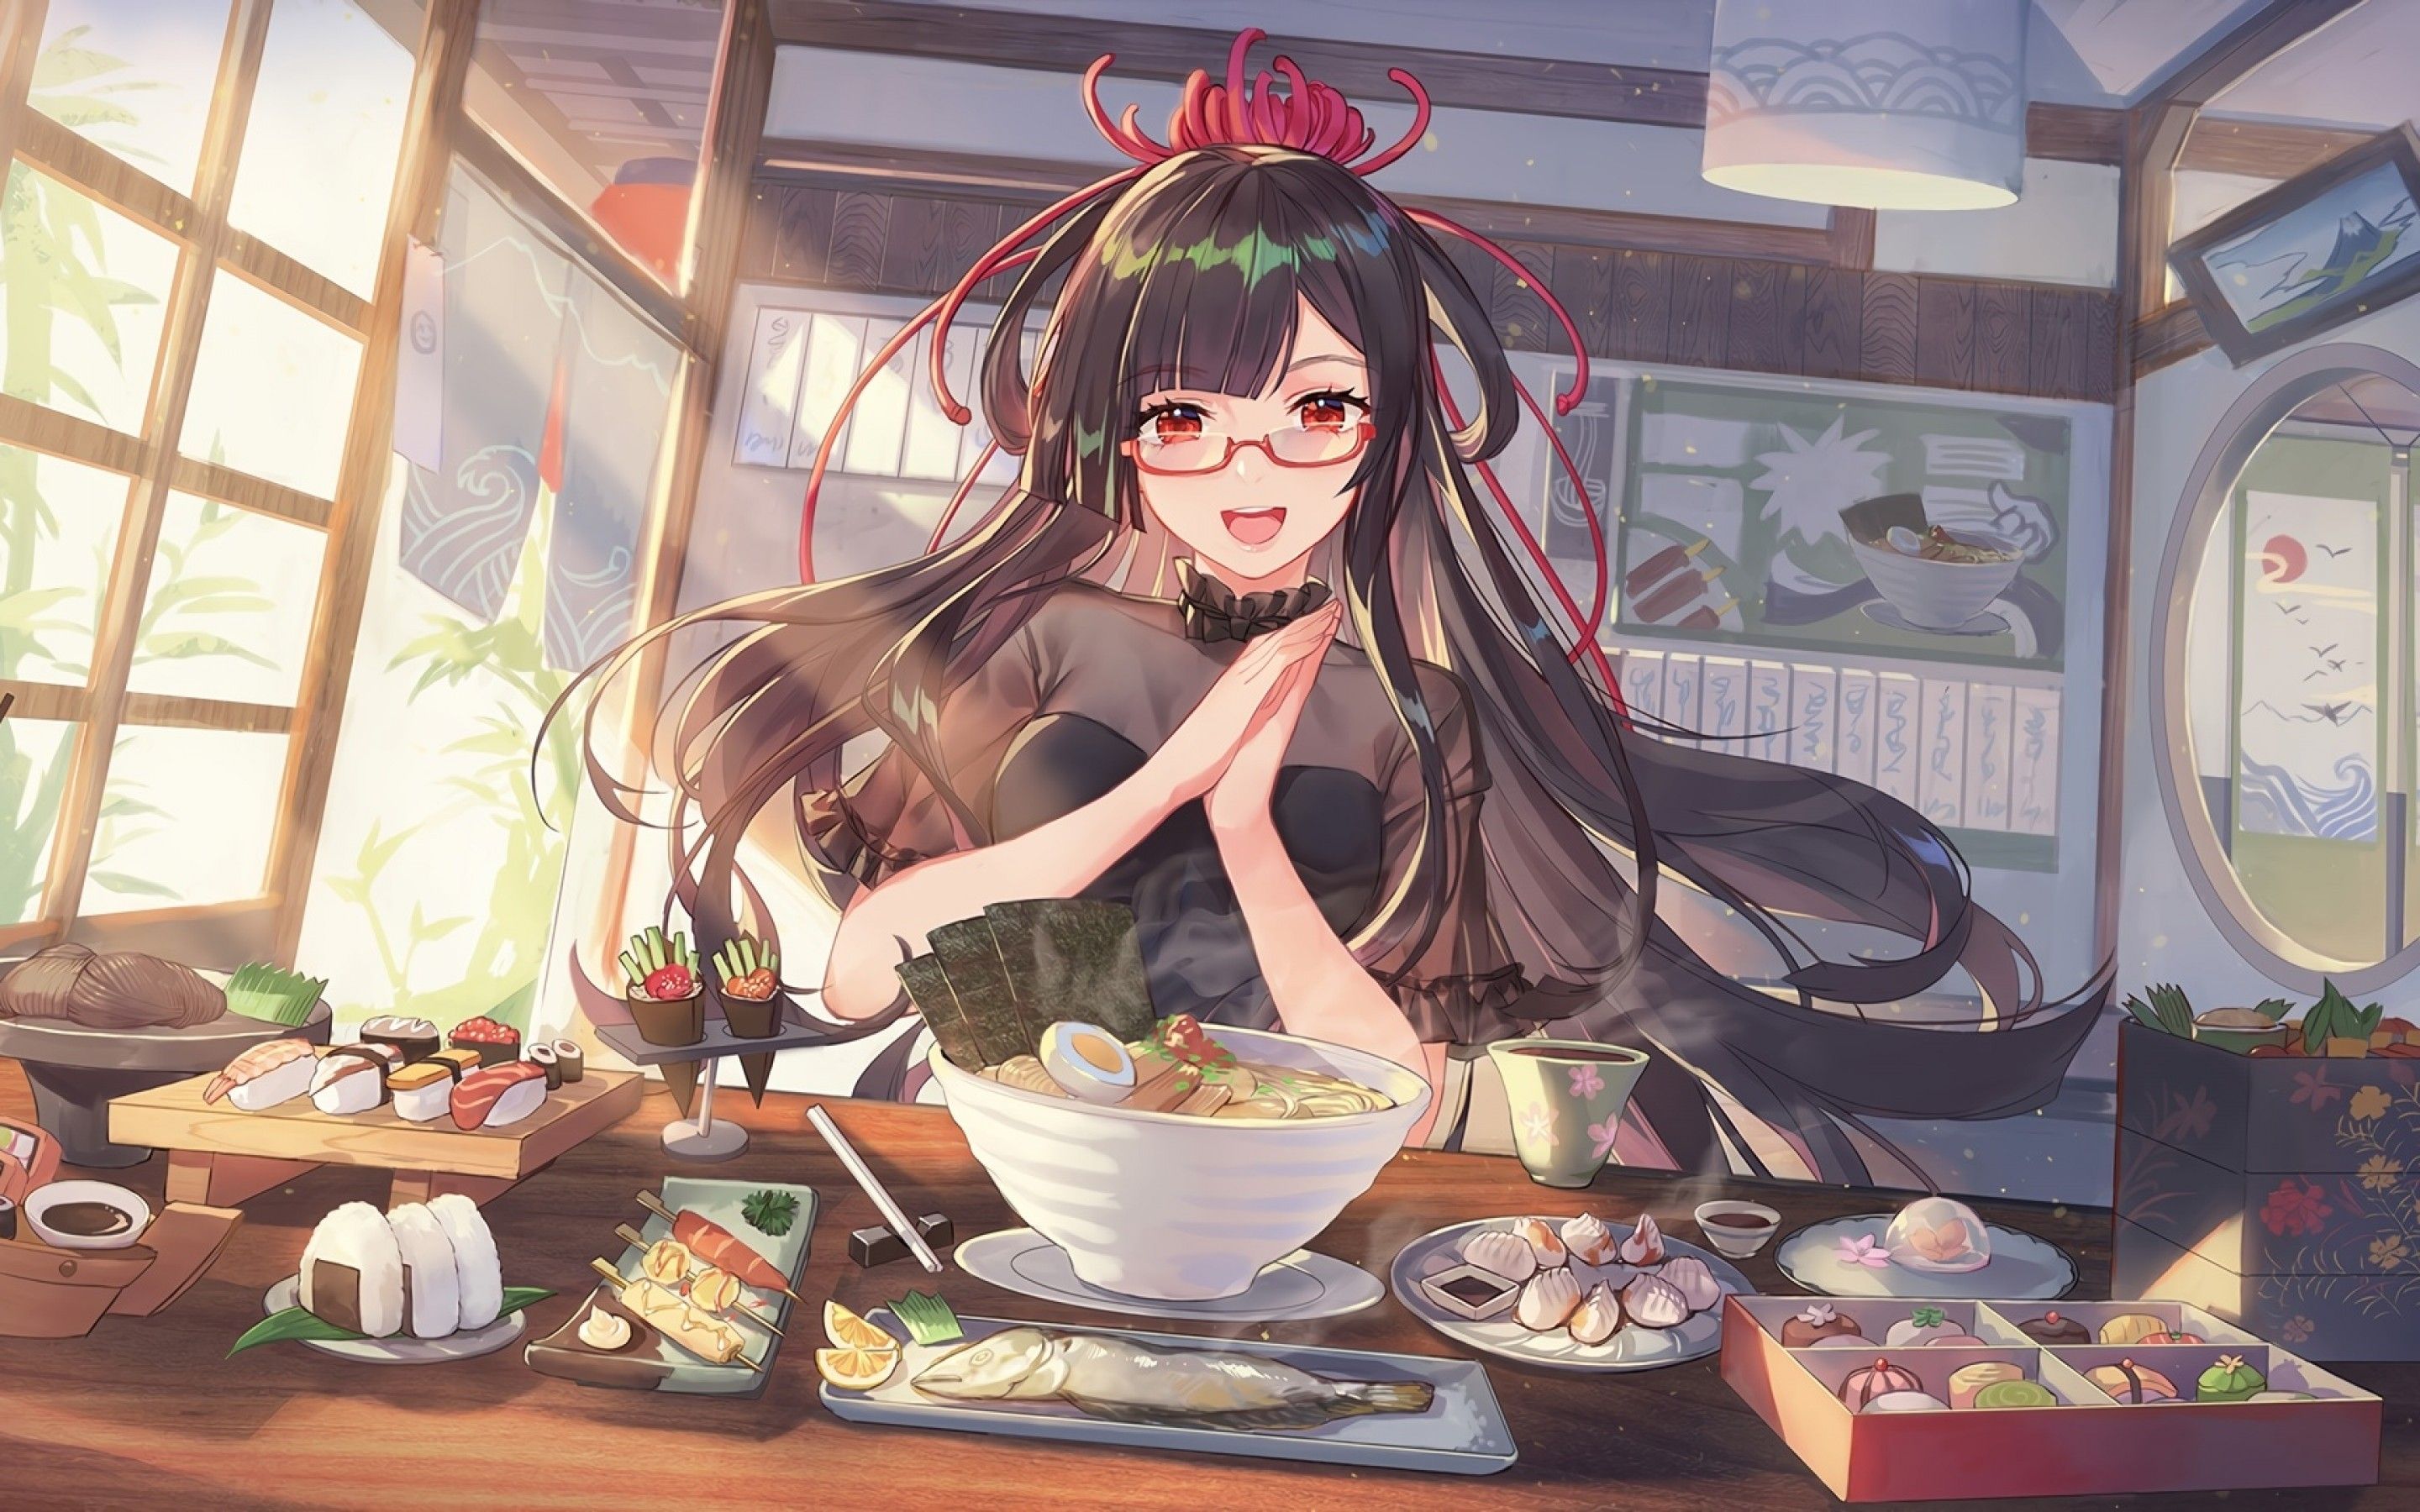 Download 2880x1800 Meganekko, Anime Girl, Cooking, Ramen, Long Hair, Food, Onigiri Wallpaper for MacBook Pro 15 inch